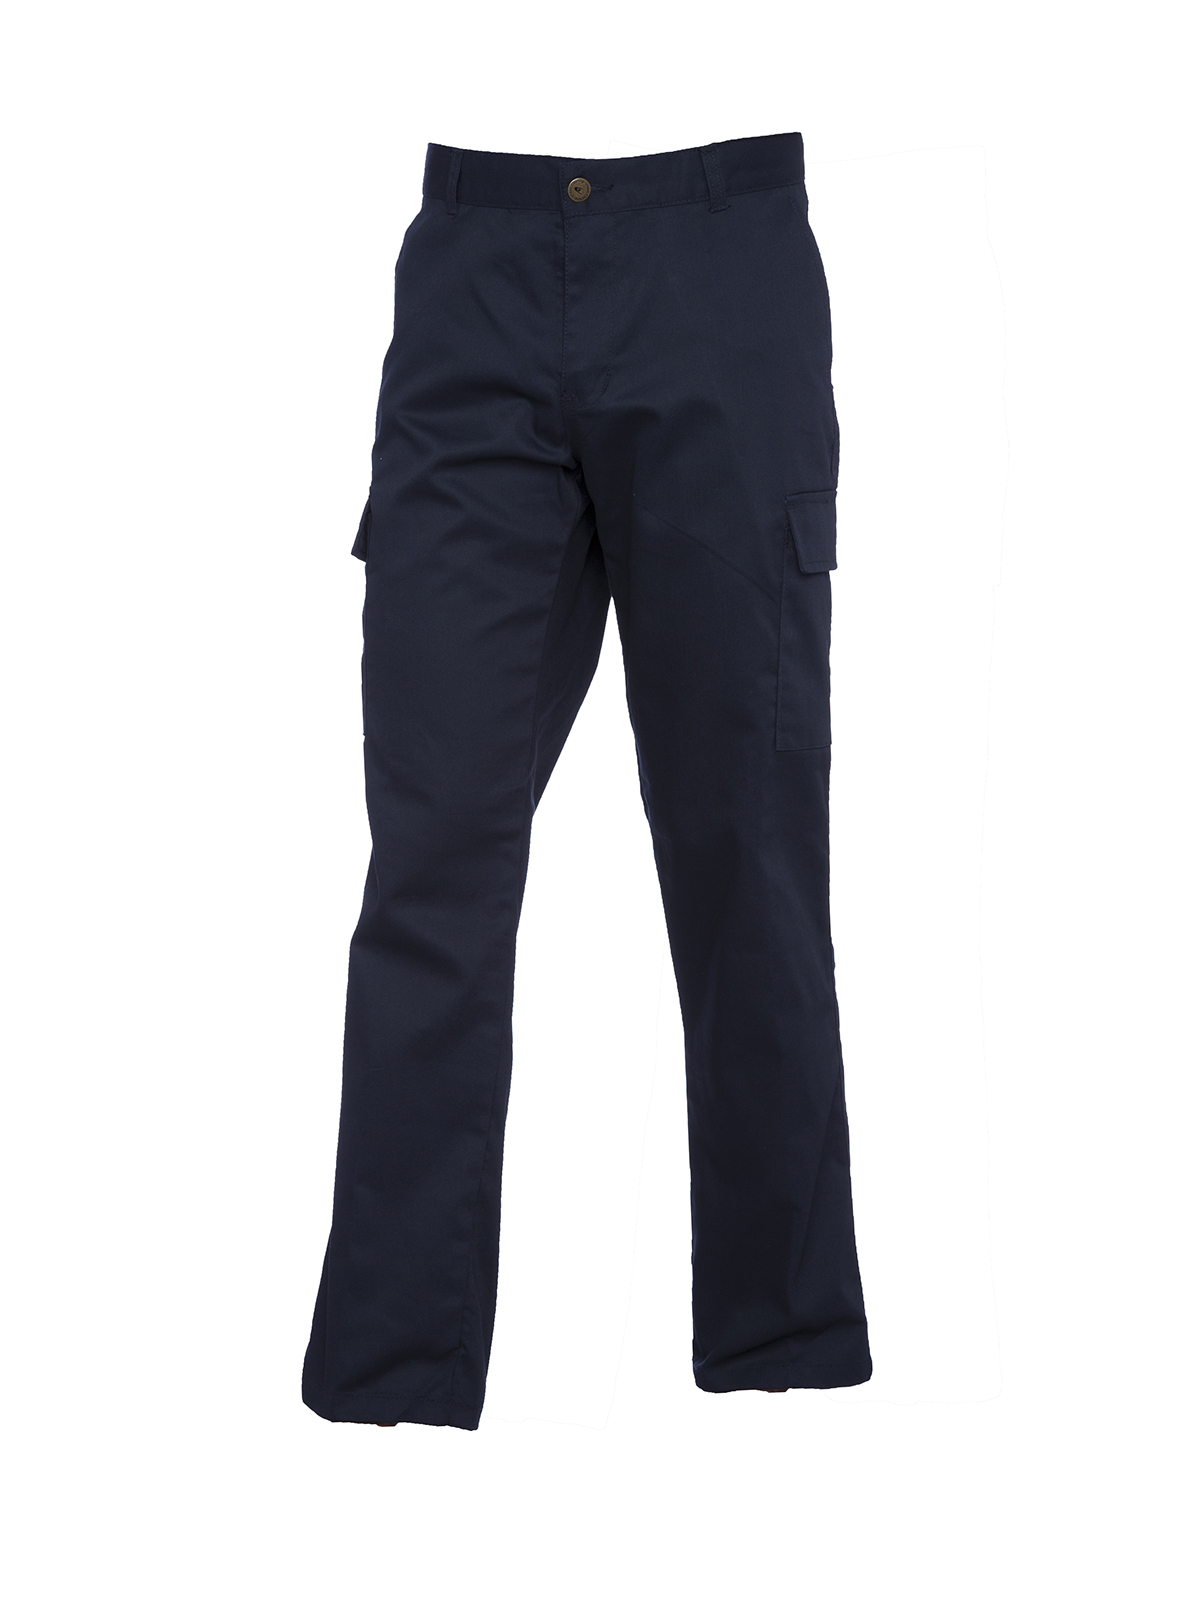 Ladies Cargo Trousers, Navy - Size 8